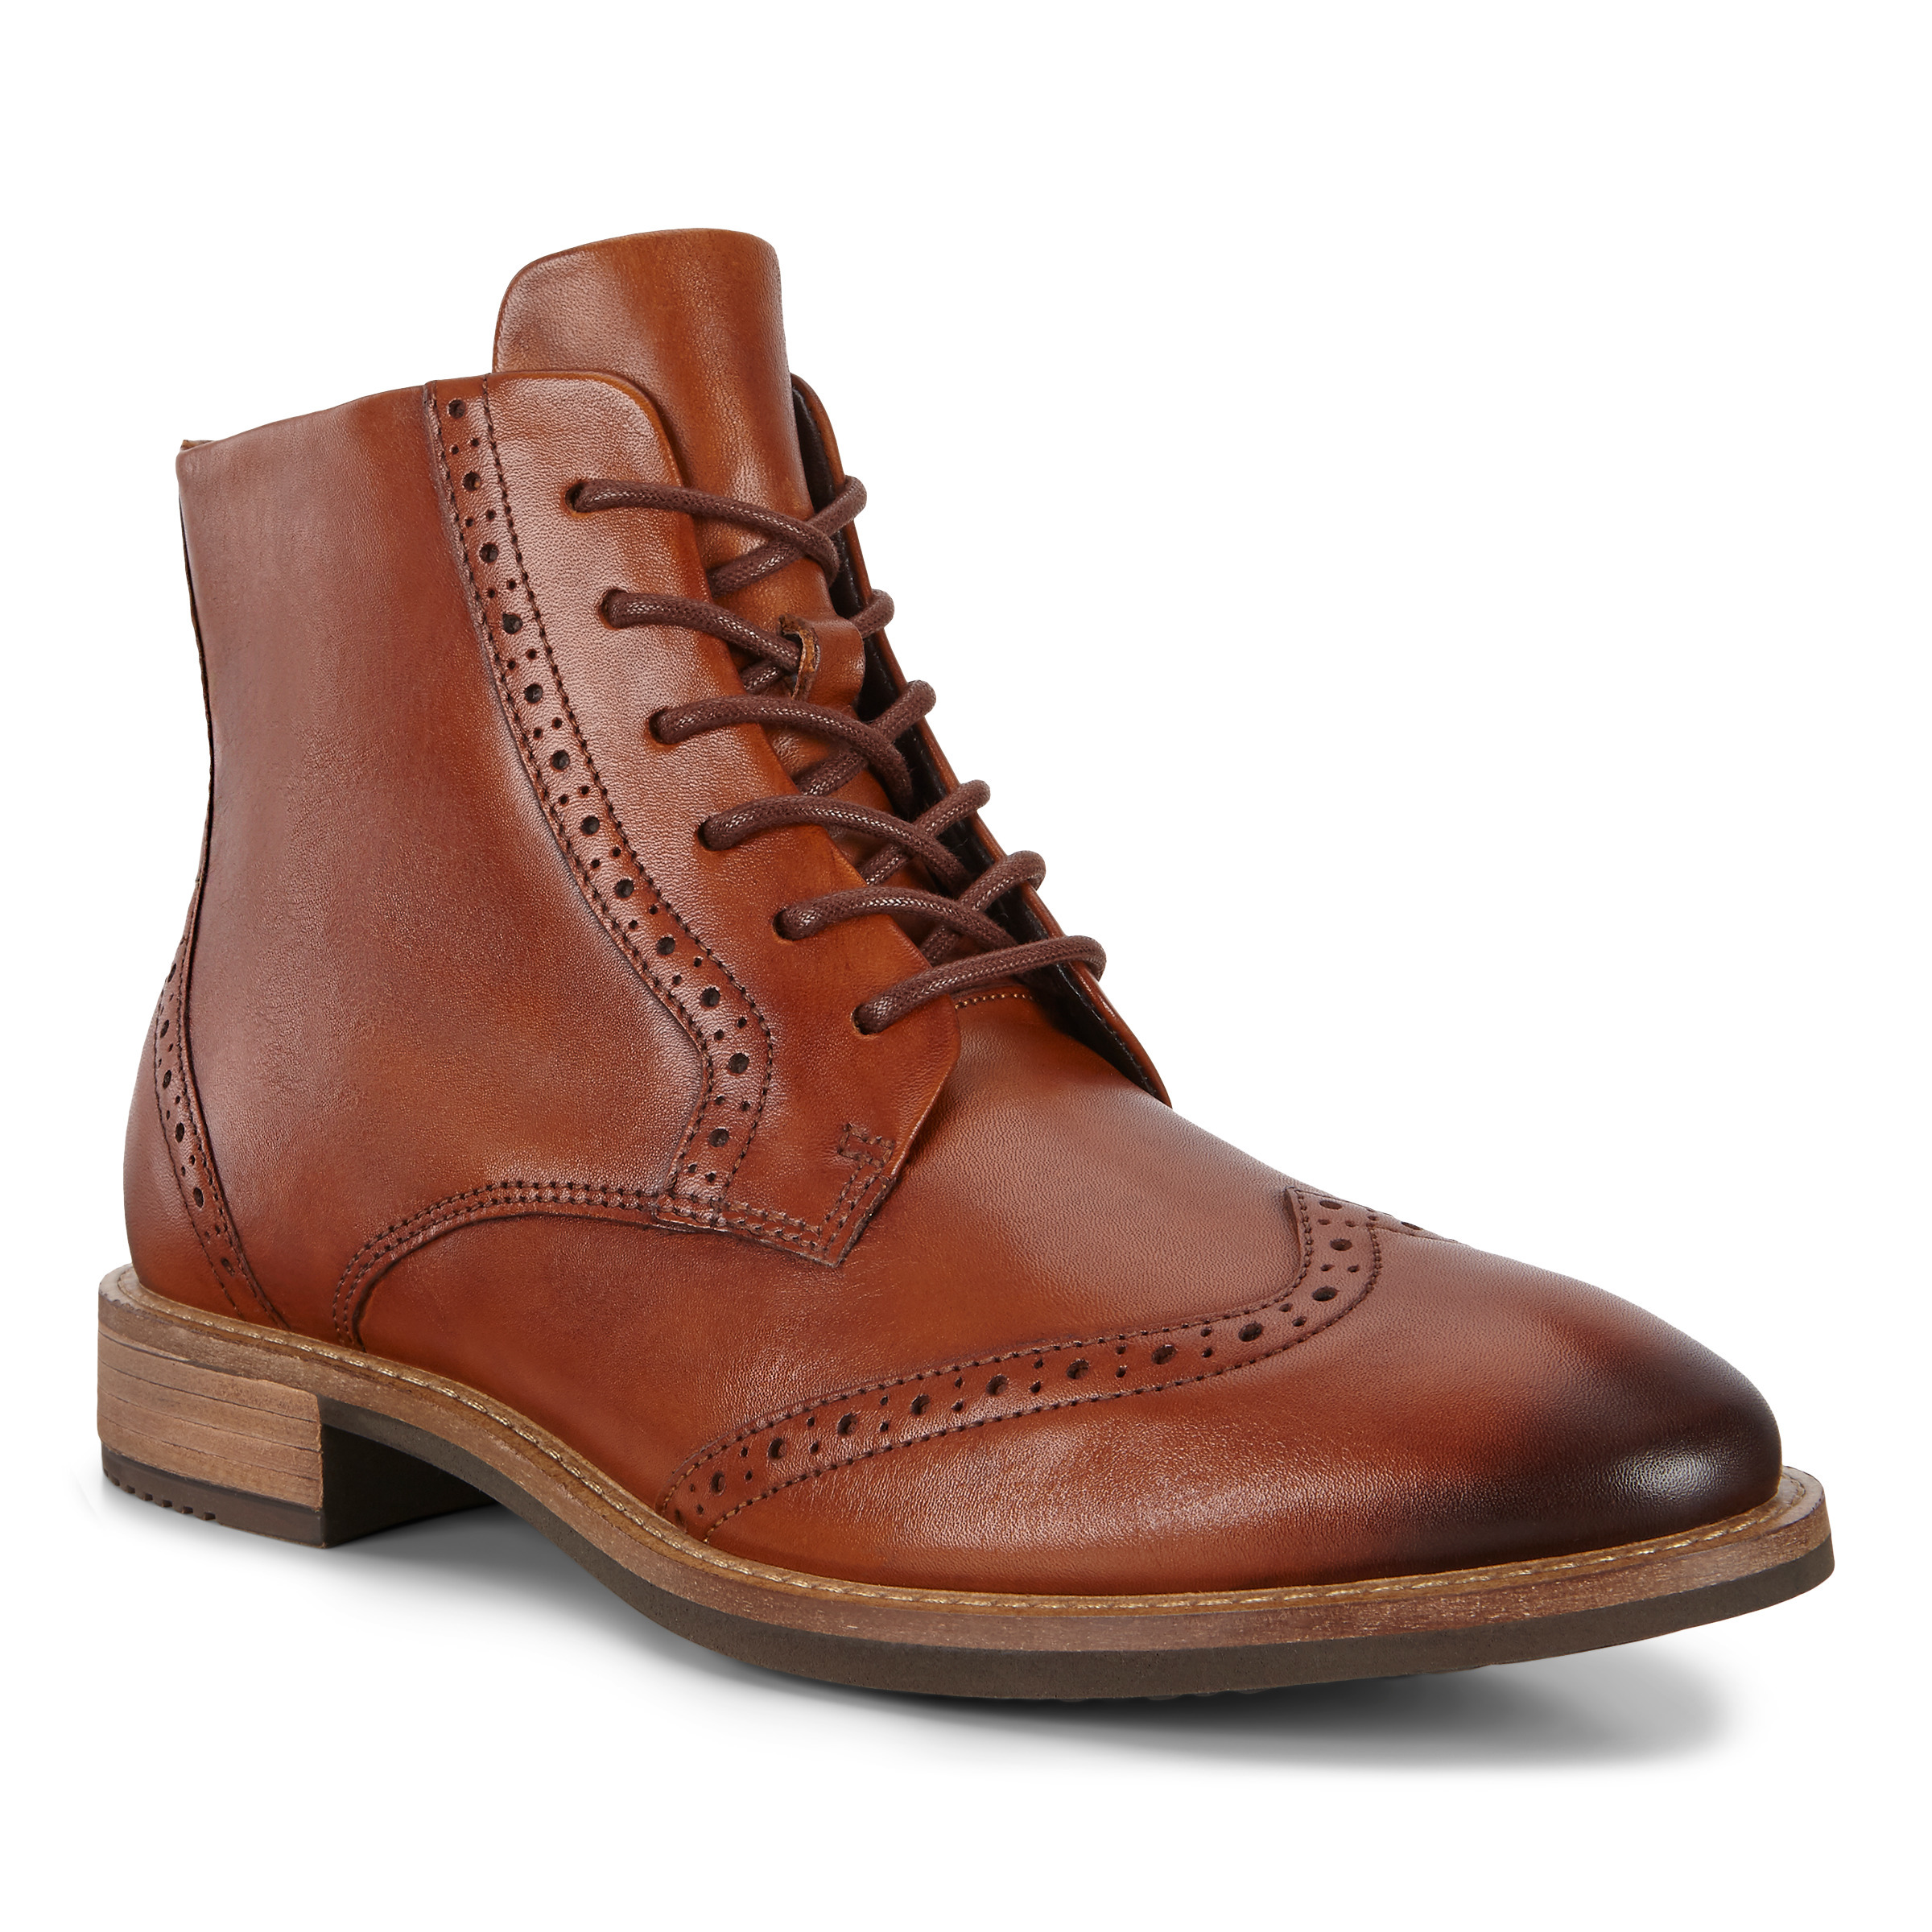 Sartorelle 25 Tailored - ECCO Shoes NZ